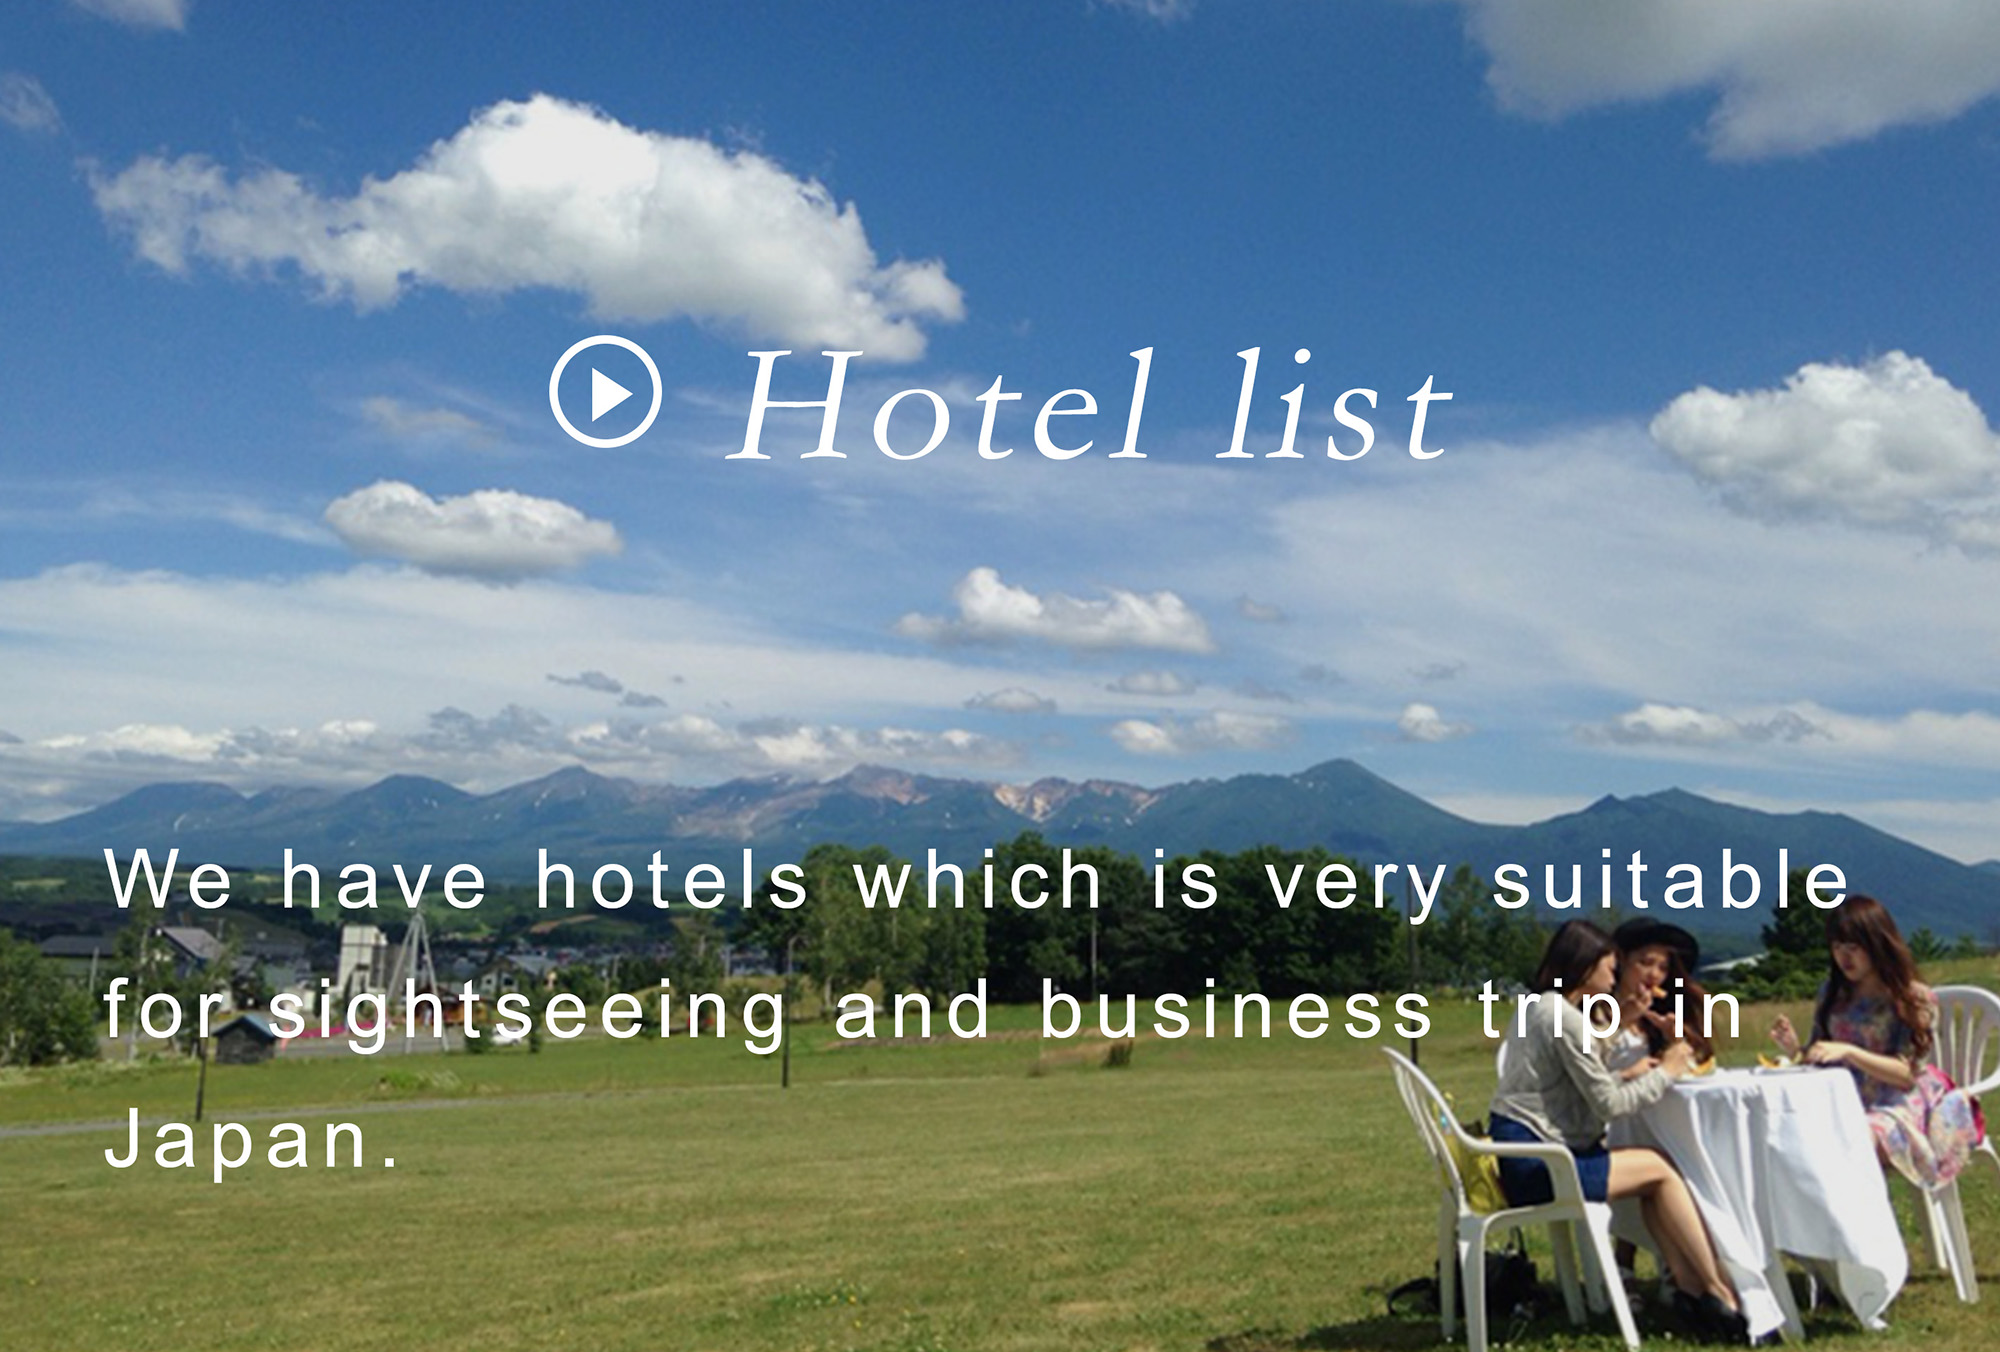 Hotel&Resort 観光・ビジネスに最適な、交通アクセスの便利なホテルを各地に展開。